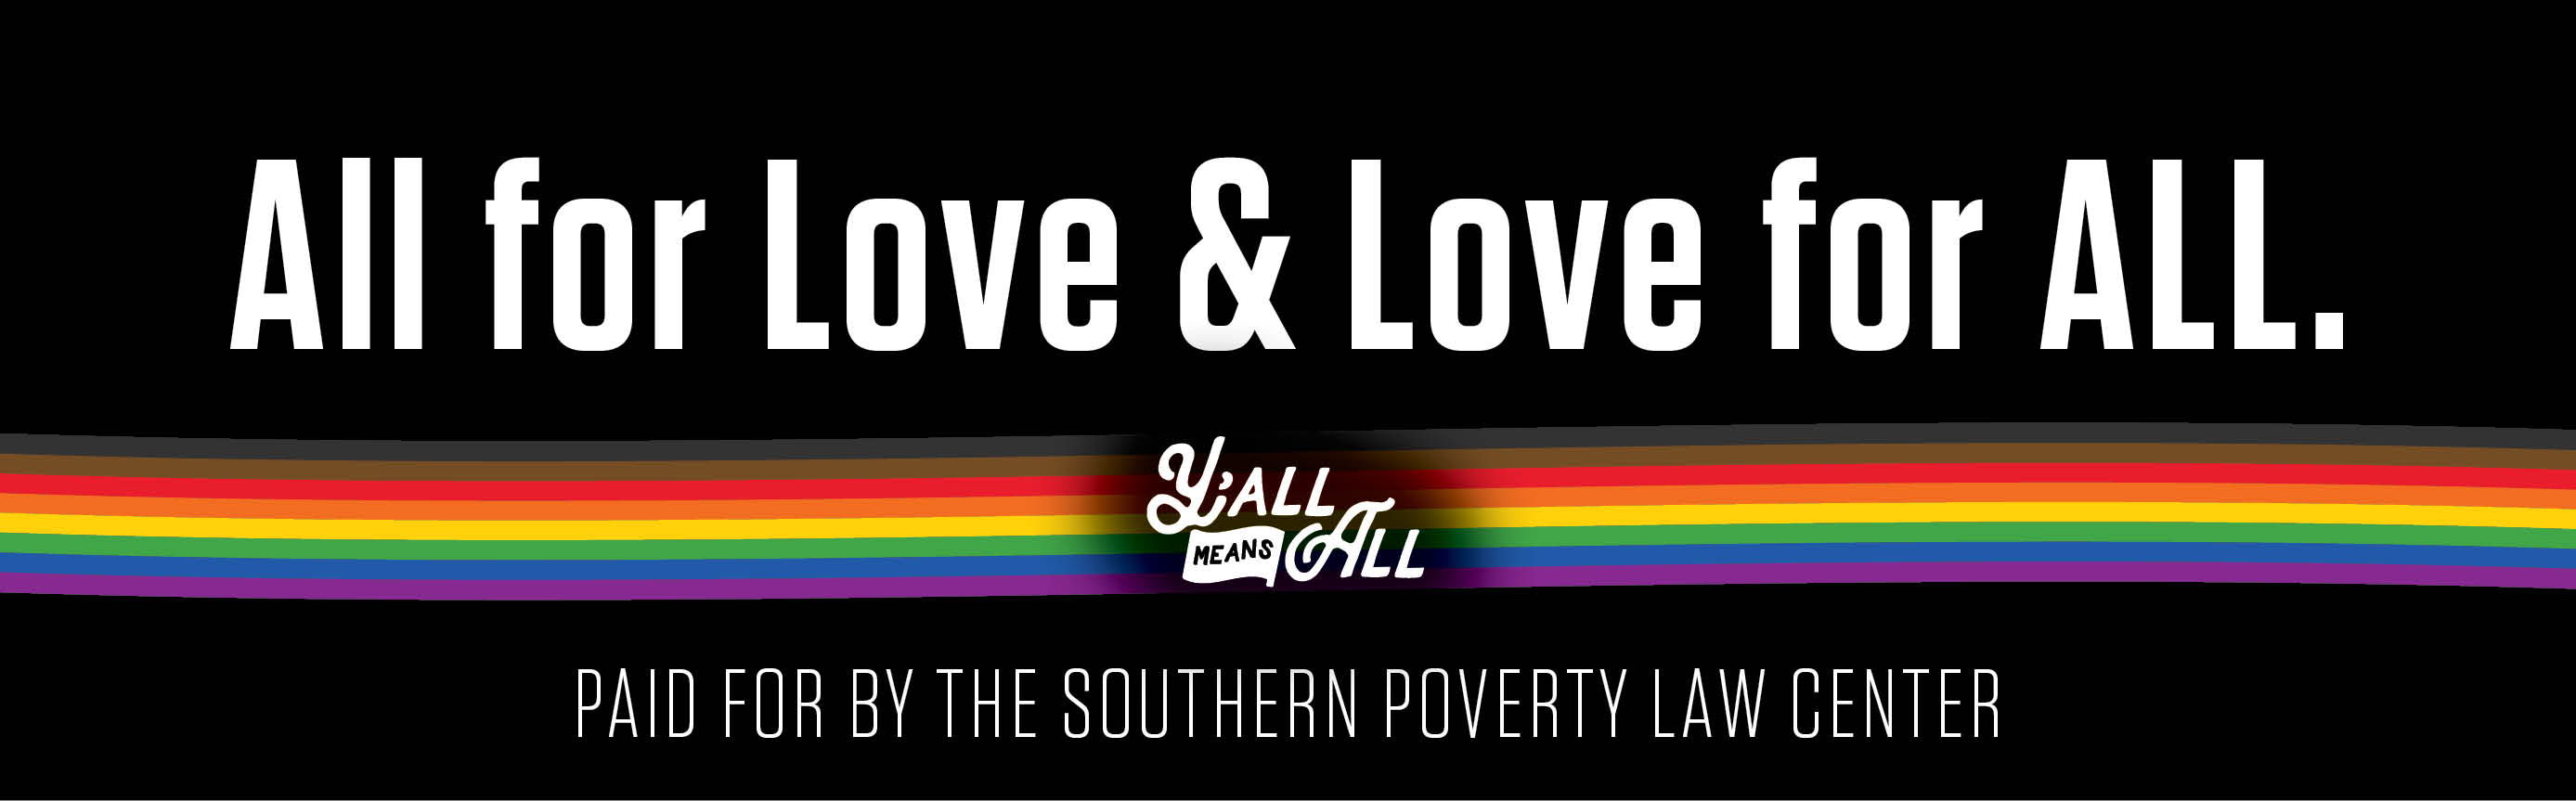 LGBTQ Billboard in Montgomery, Alabama